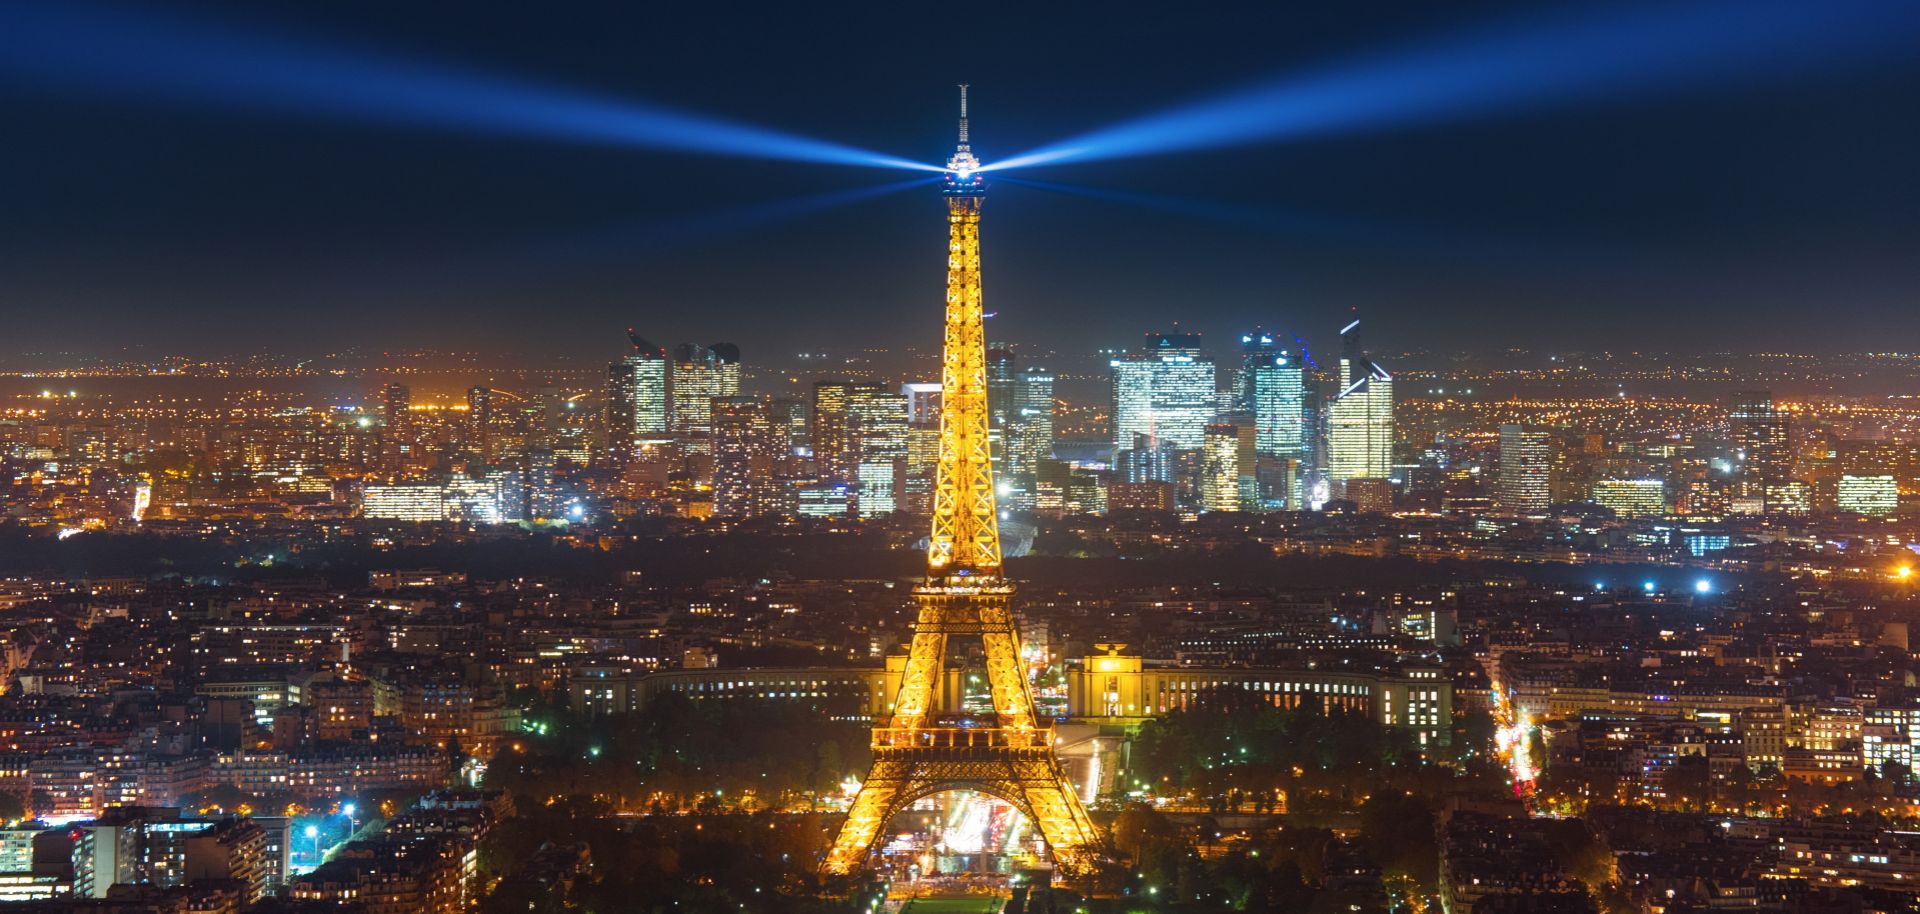 Paris' Eiffel Tower is seen at night.